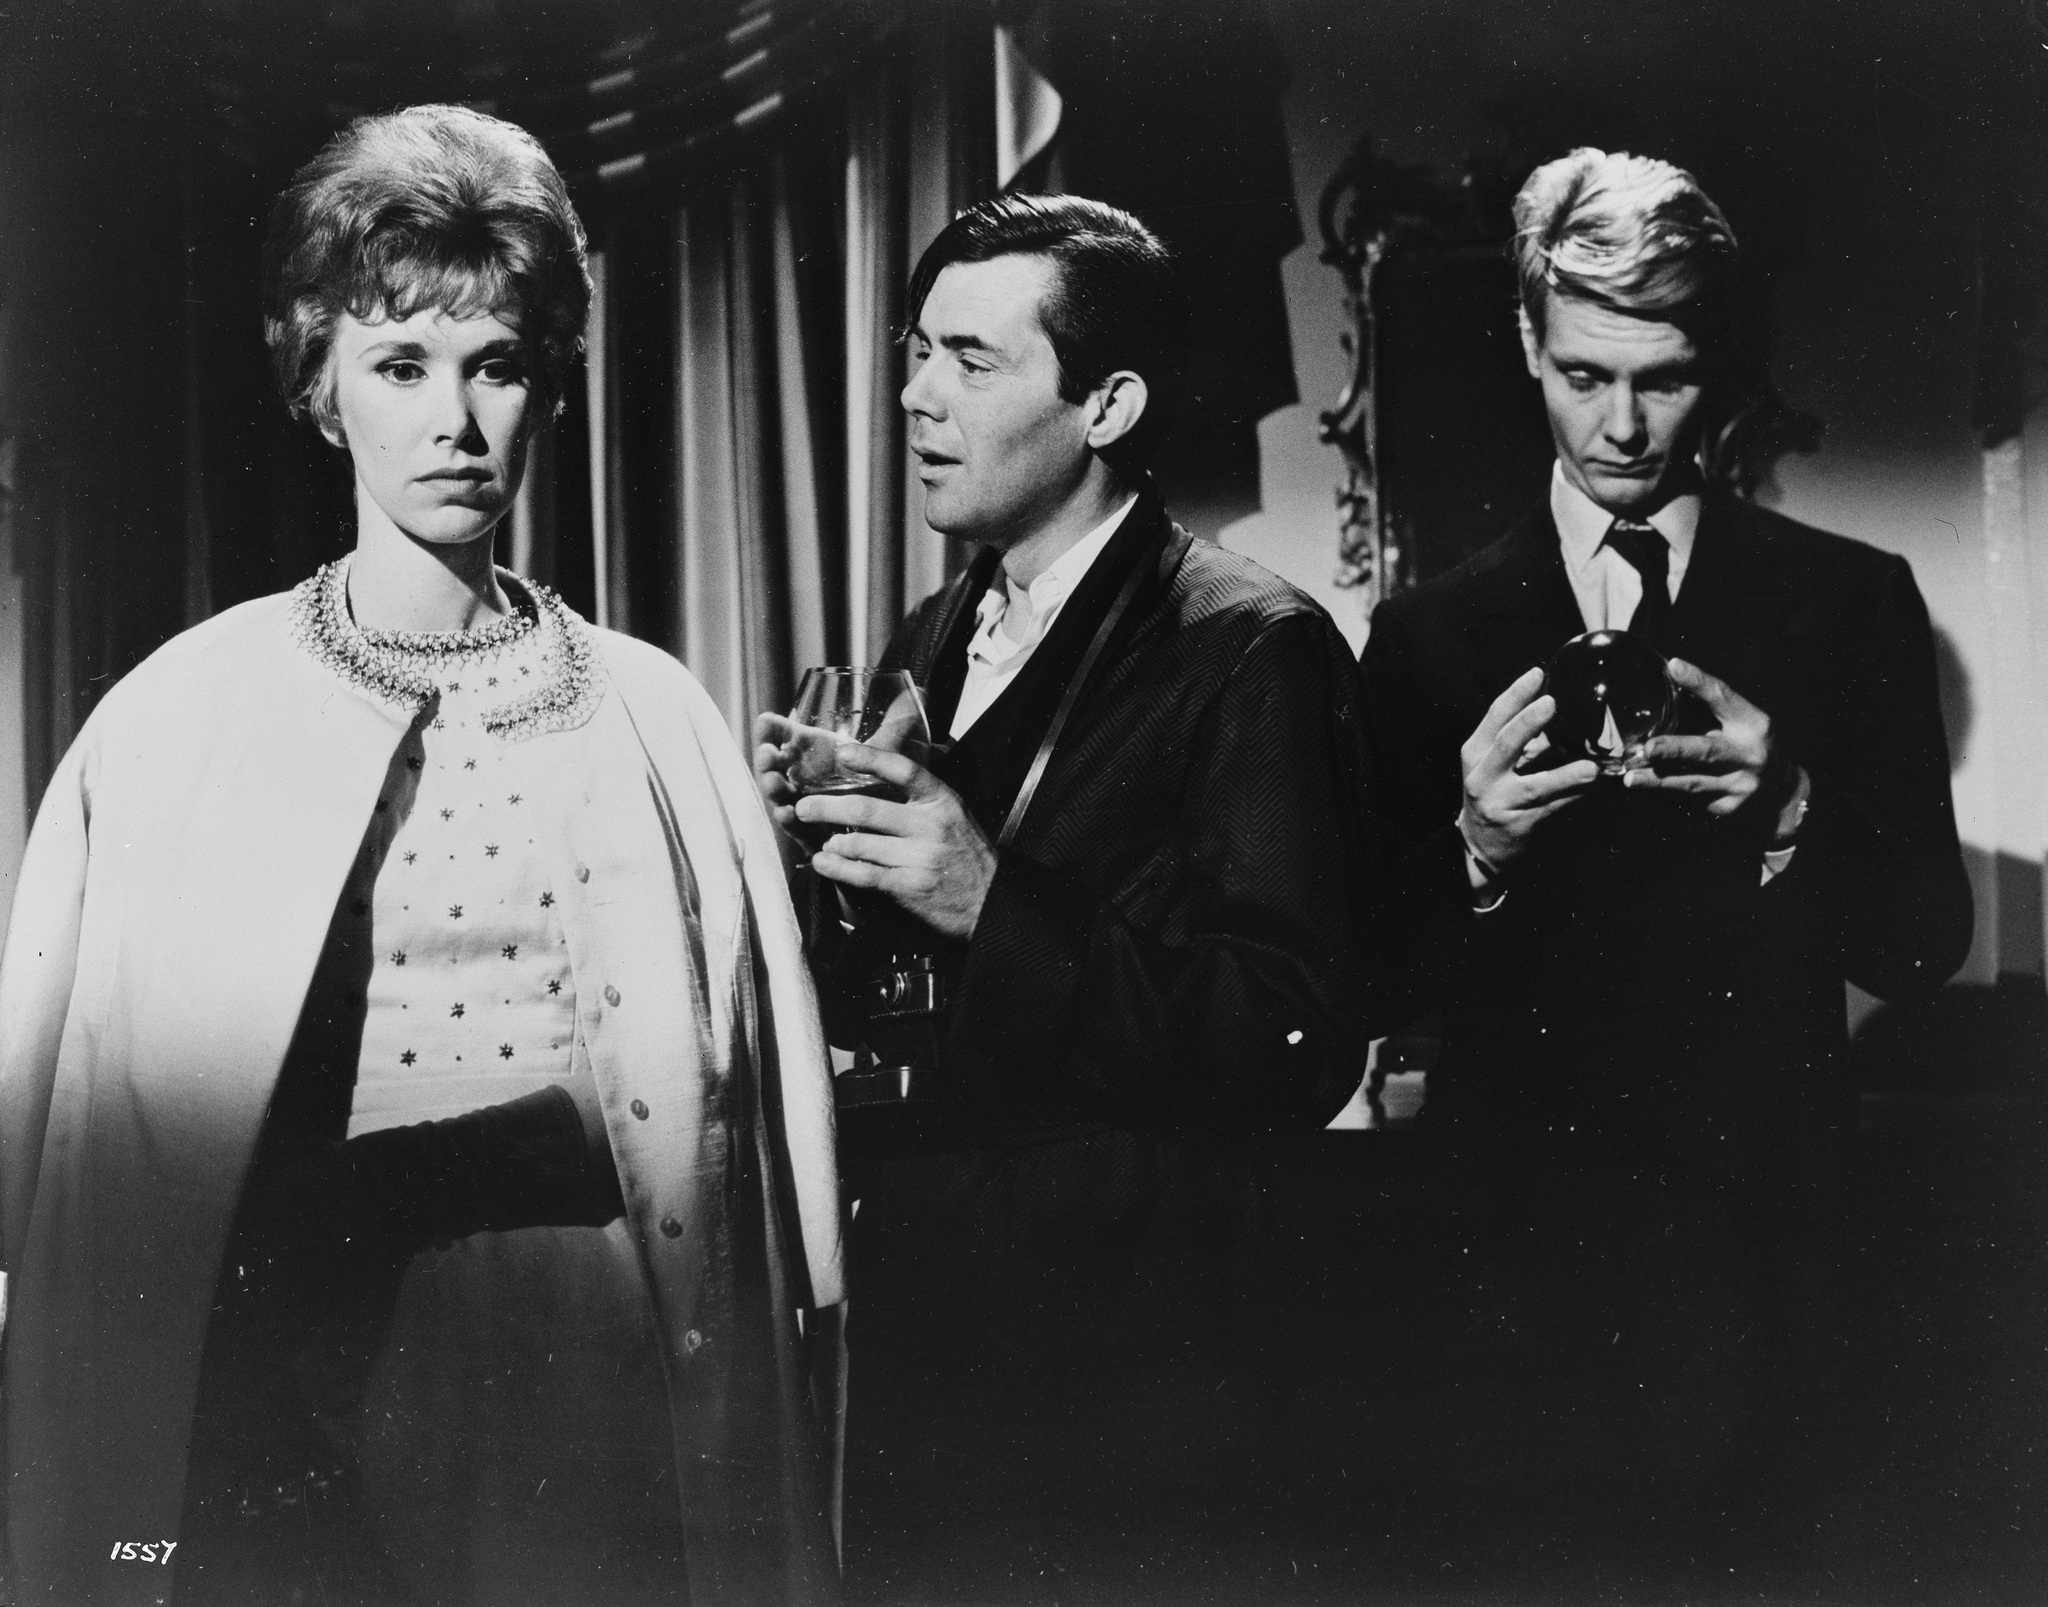 Still of Dirk Bogarde in The Servant (1963)